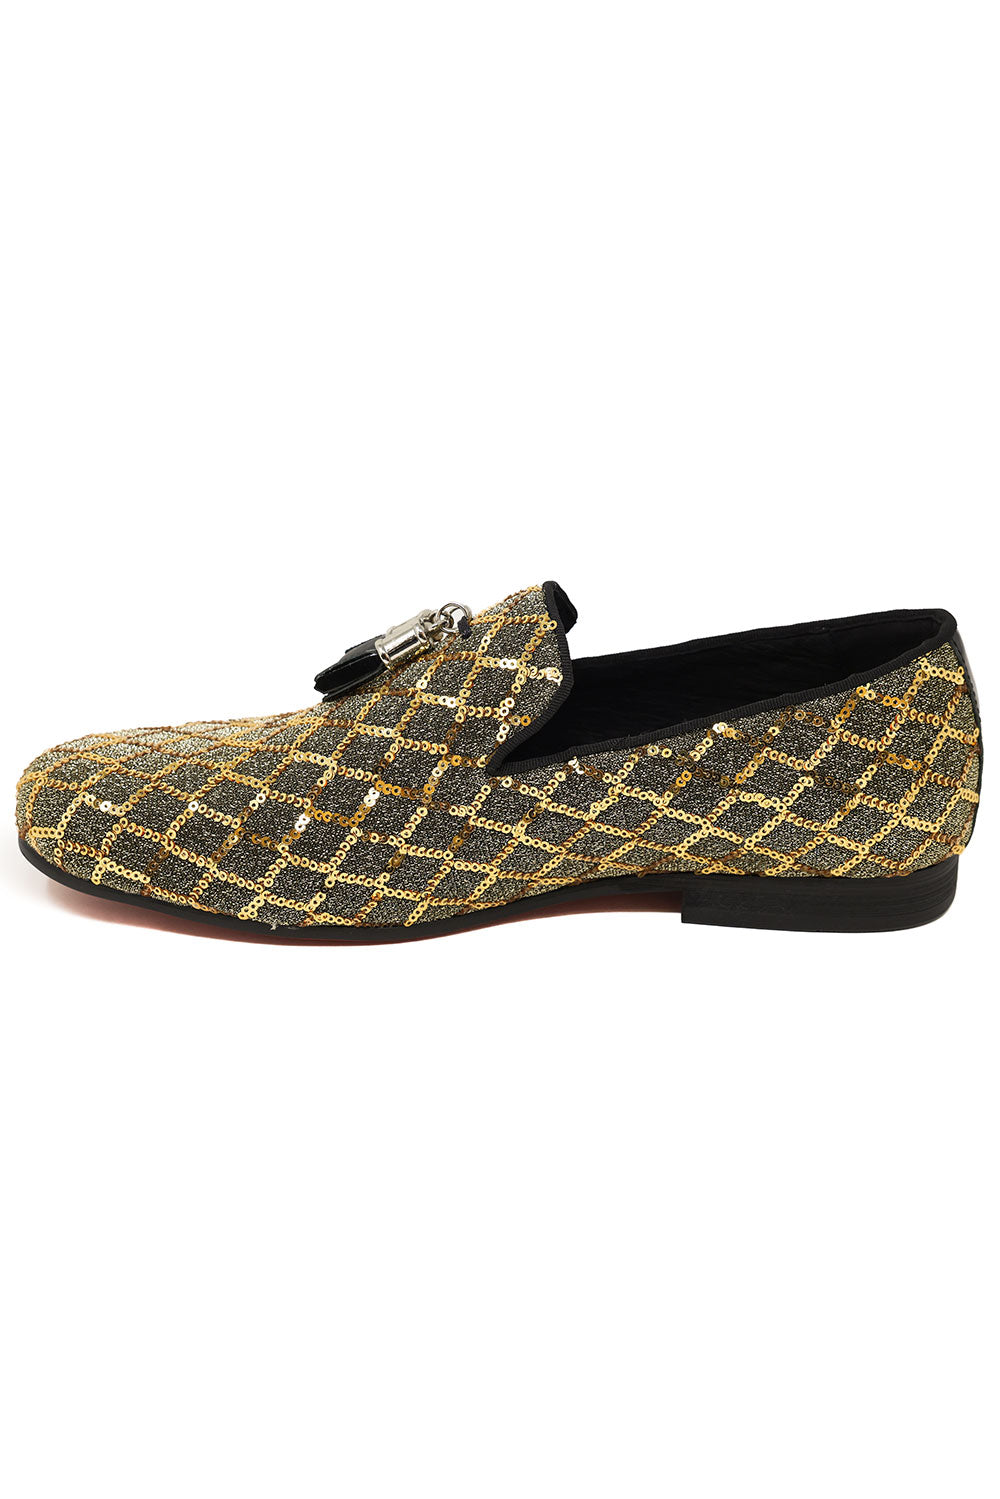 Barabas Men's Sequin Design Tassel Slip On Loafer Shoes 2SH3099 Gold